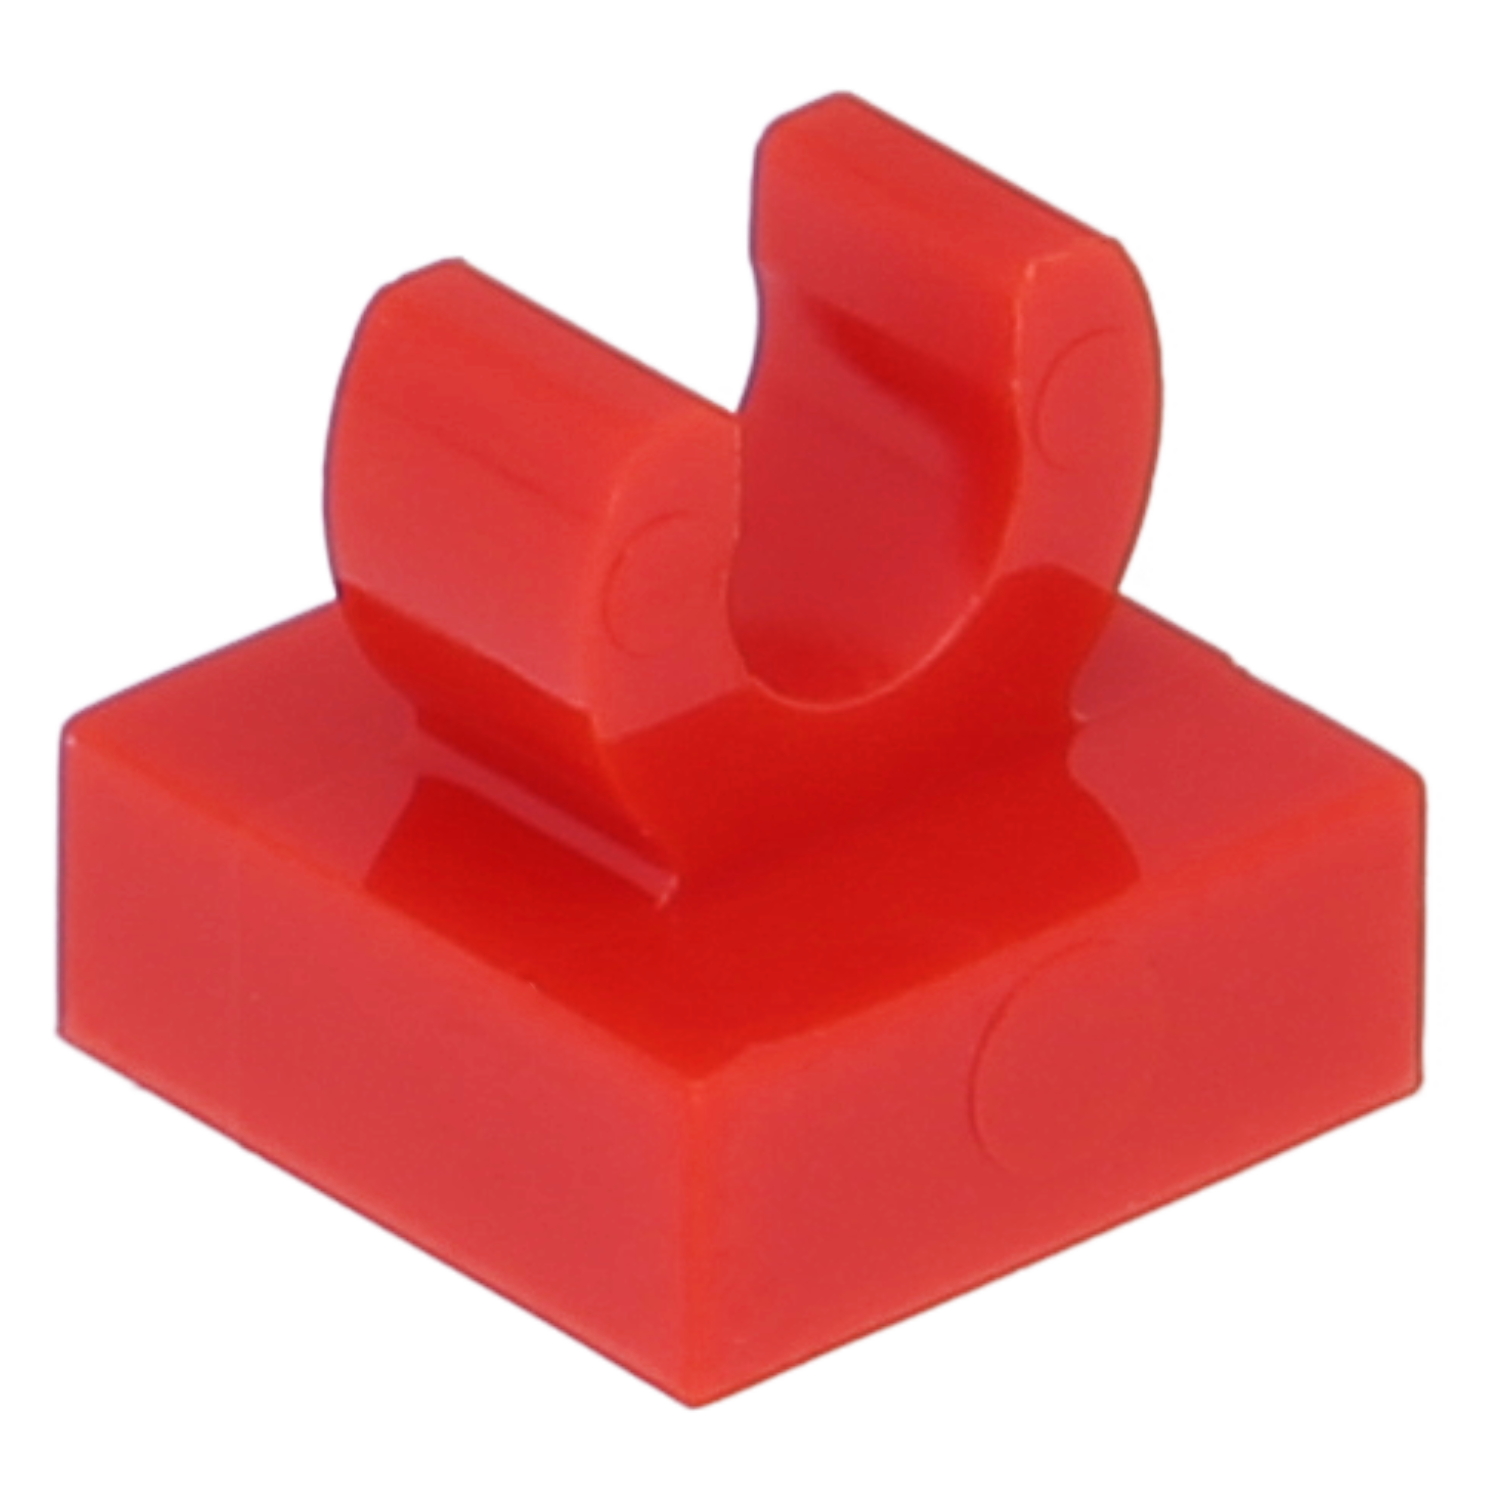 LEGO tile (modified) - 1 x 1 with an open o -clip